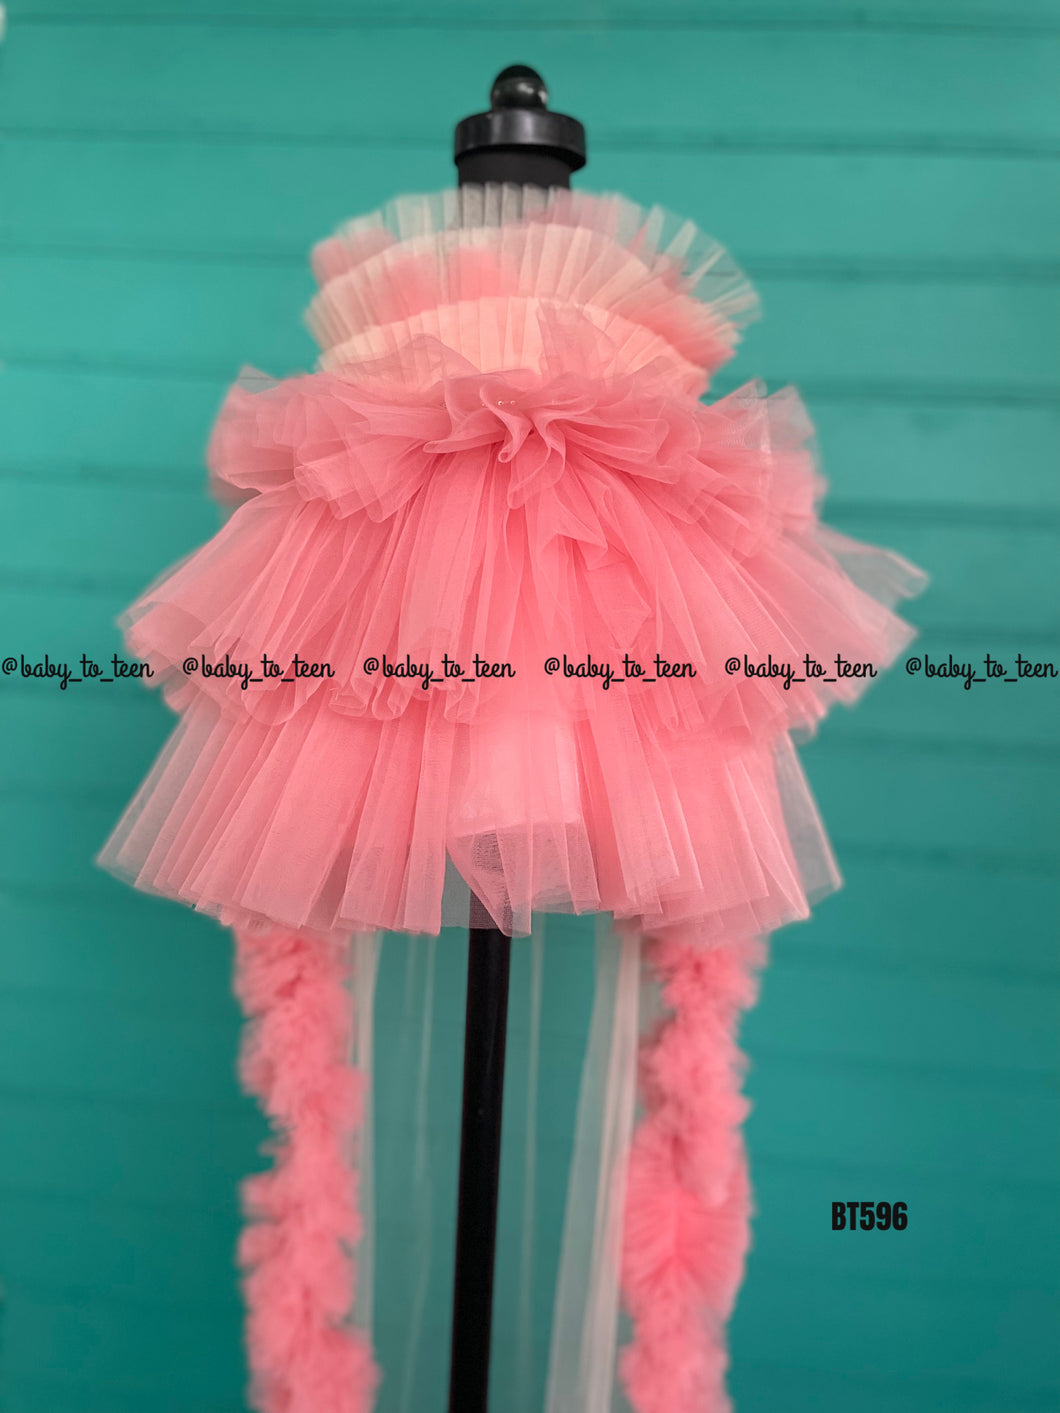 BT596 Sparkle & Flair – Dress to Impress at Every Festivity